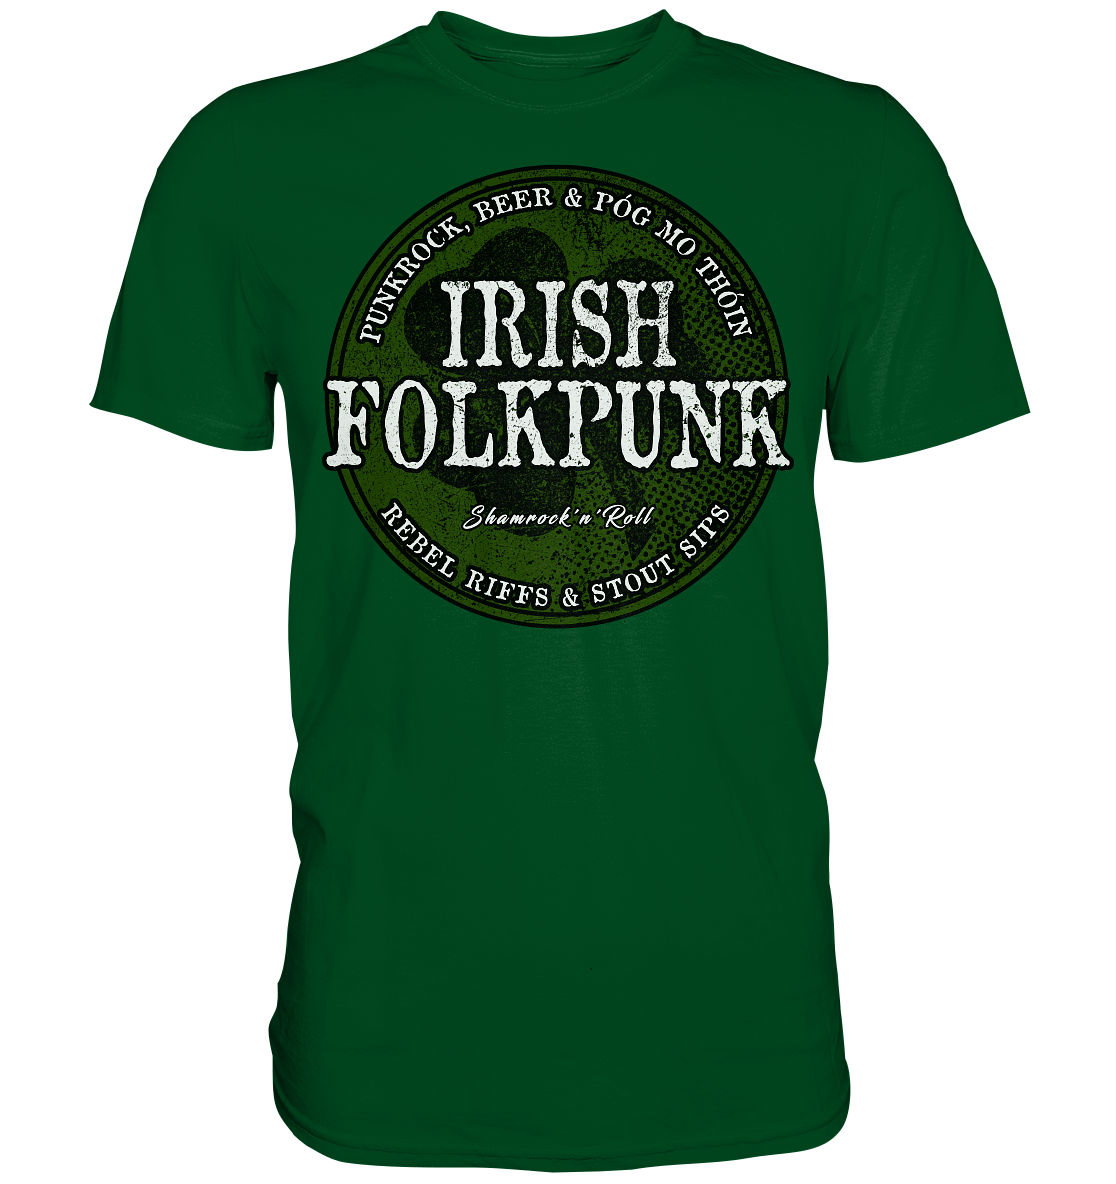 Irish Folkpunk "Shamrock'n'Roll" - Premium Shirt